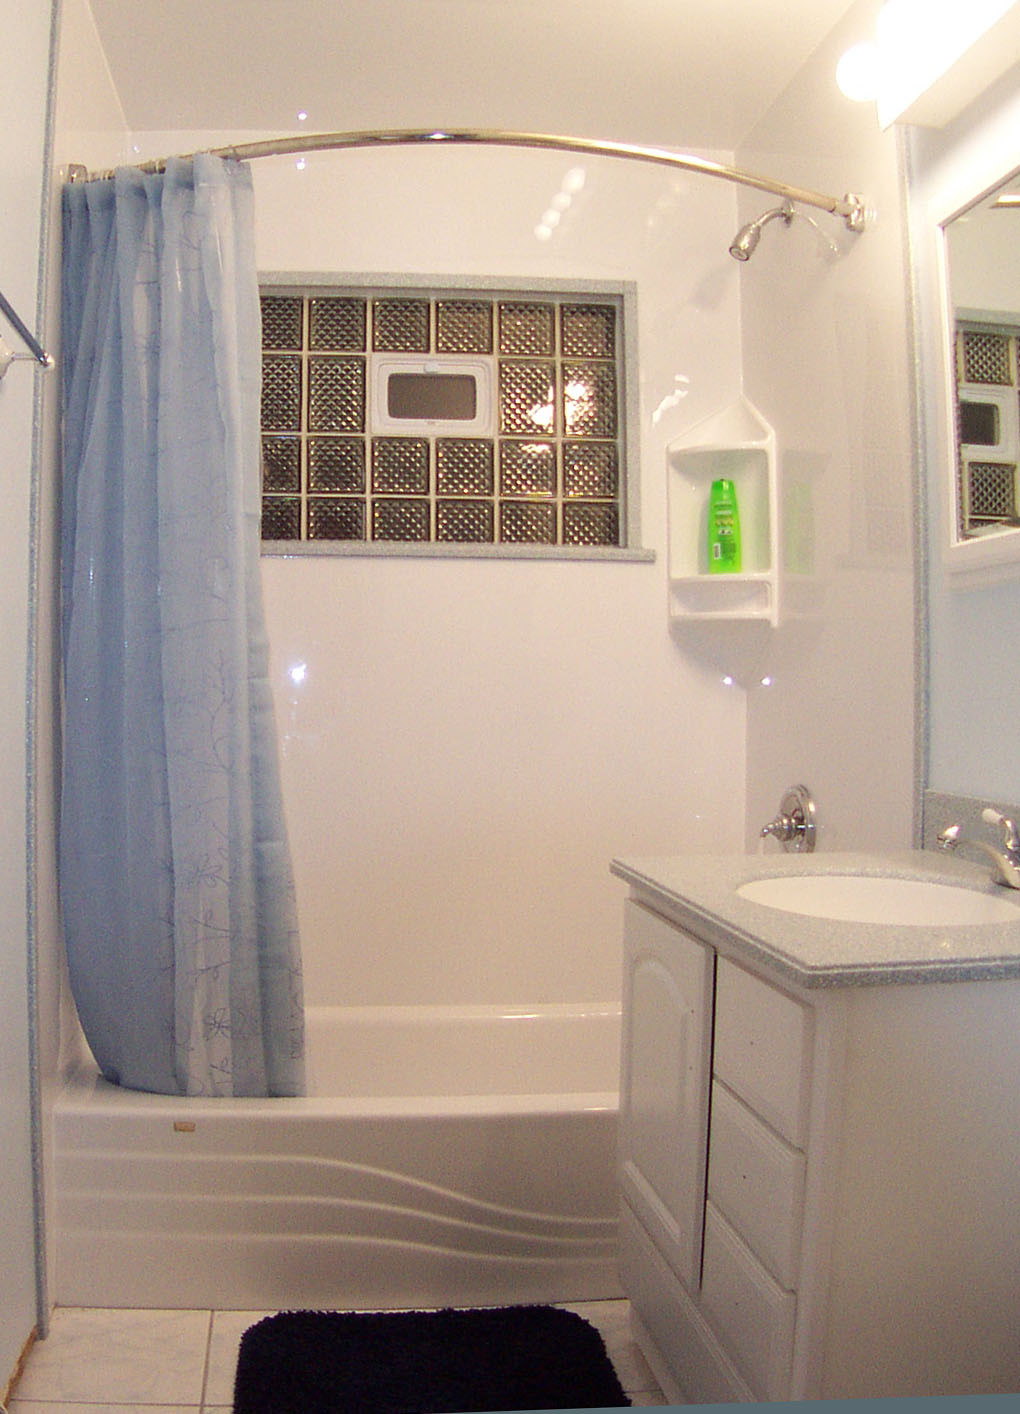 Home Depot Bathroom Remodel Ideas
 Bathroom remodel design ideas innovative renovating